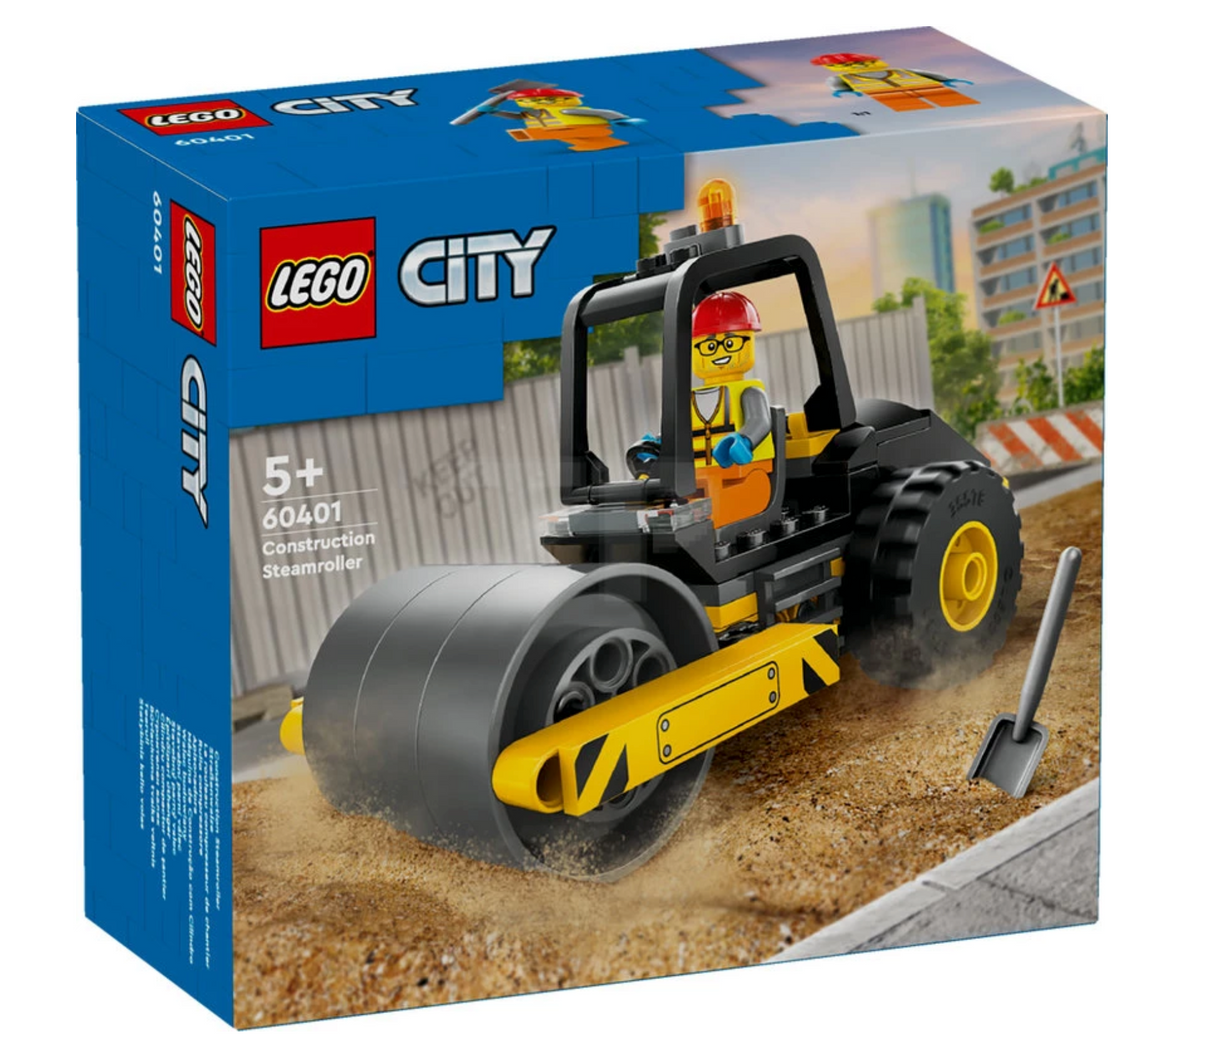 City Construction Steamroller